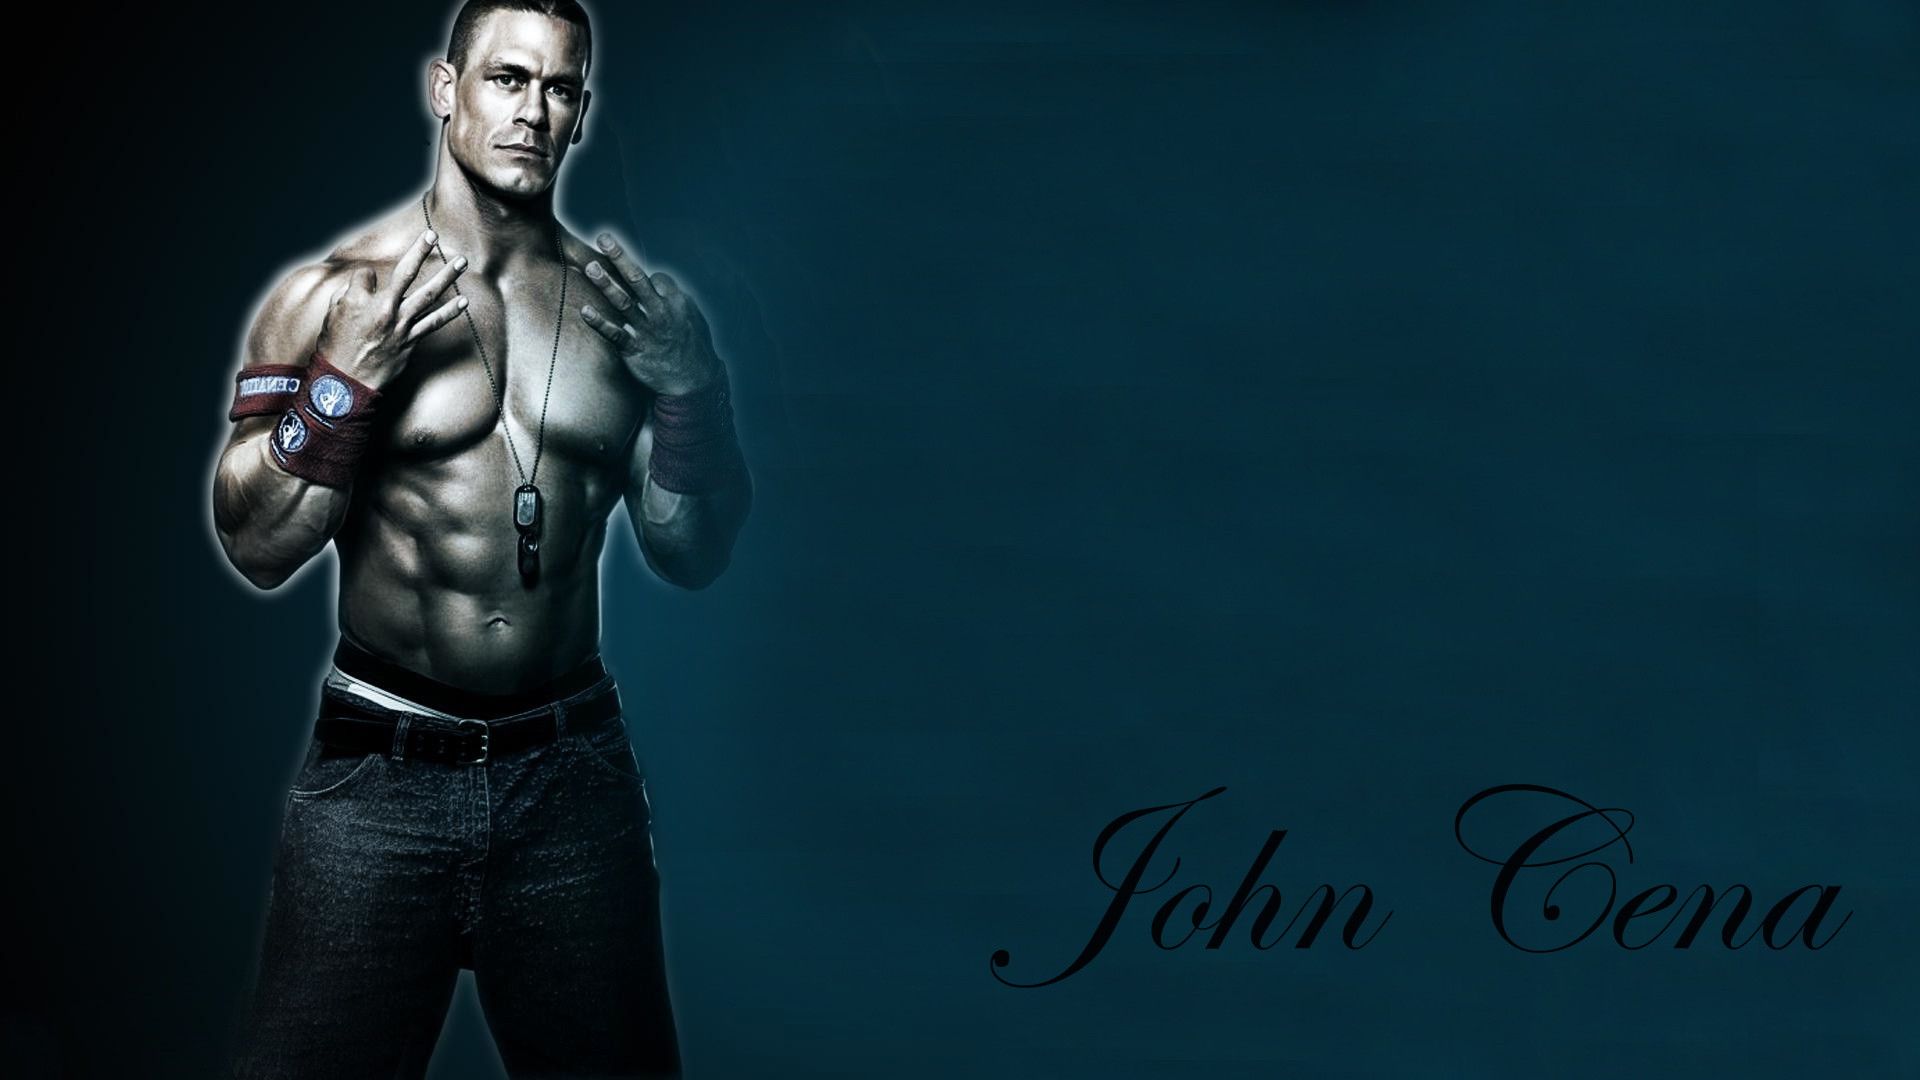 John Cena Wallpaper Picture Image